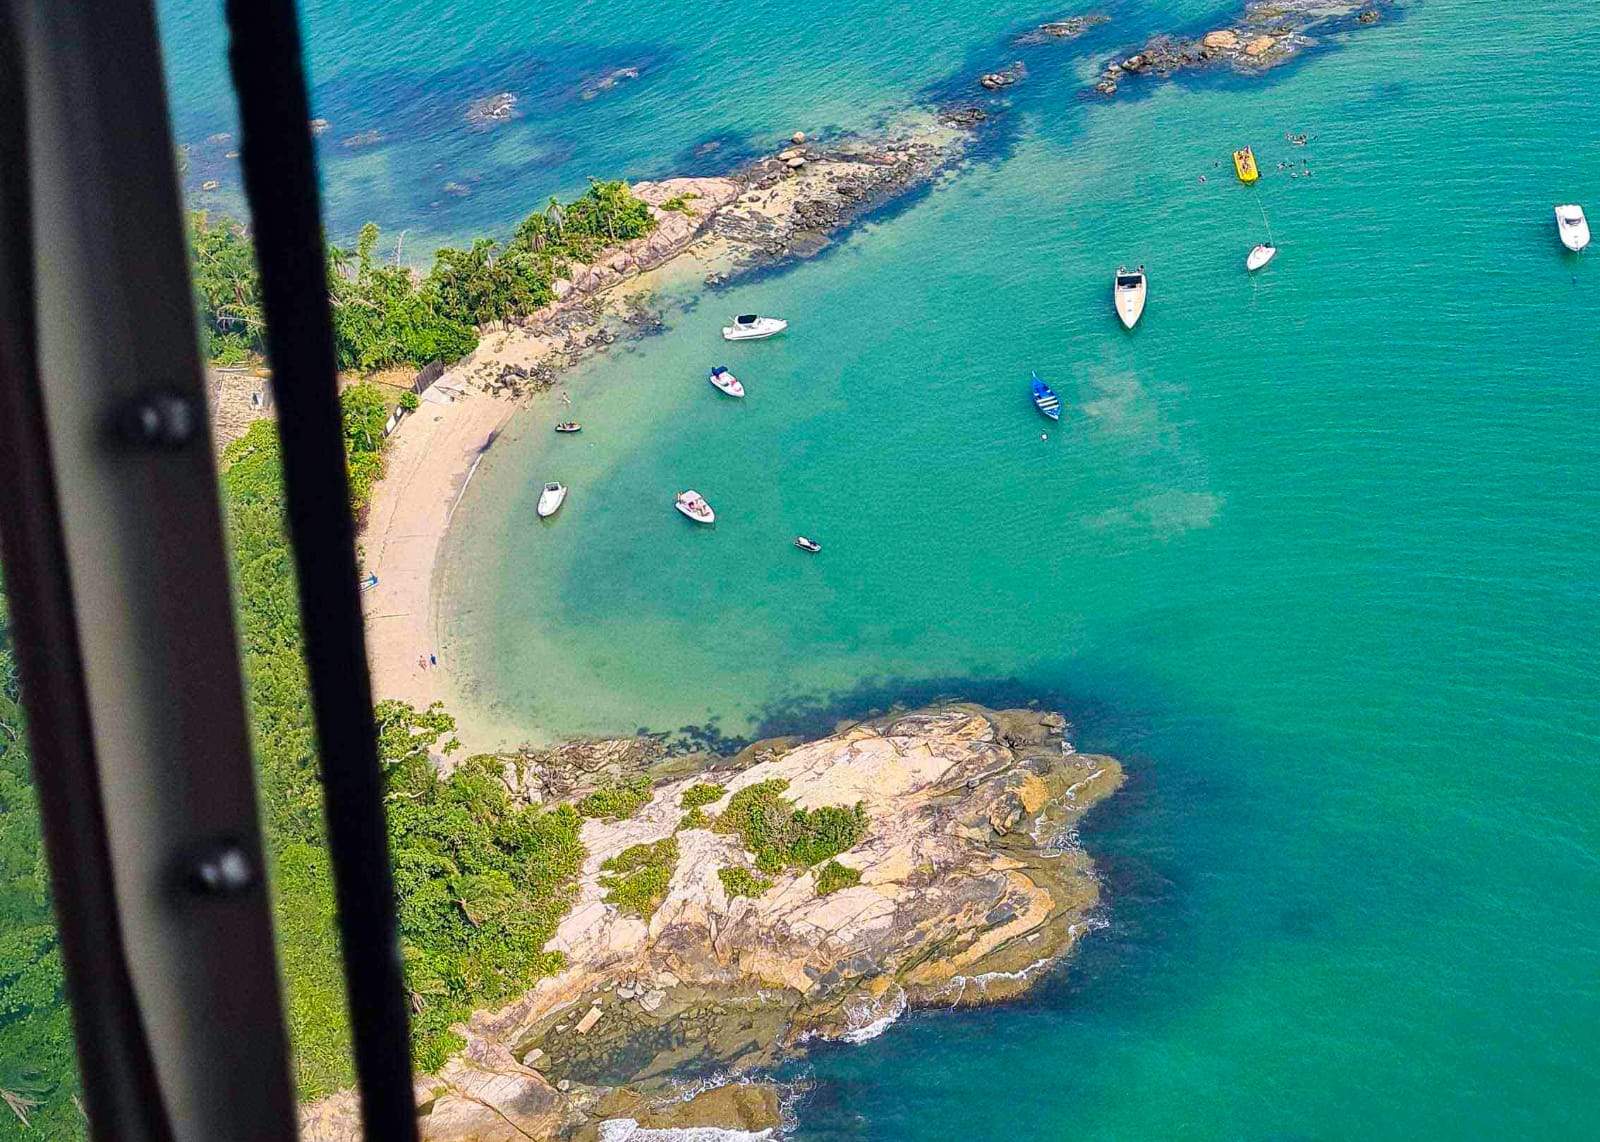 Passeio de Helicóptero em Florianópolis Traslado para toda Santa Catarina